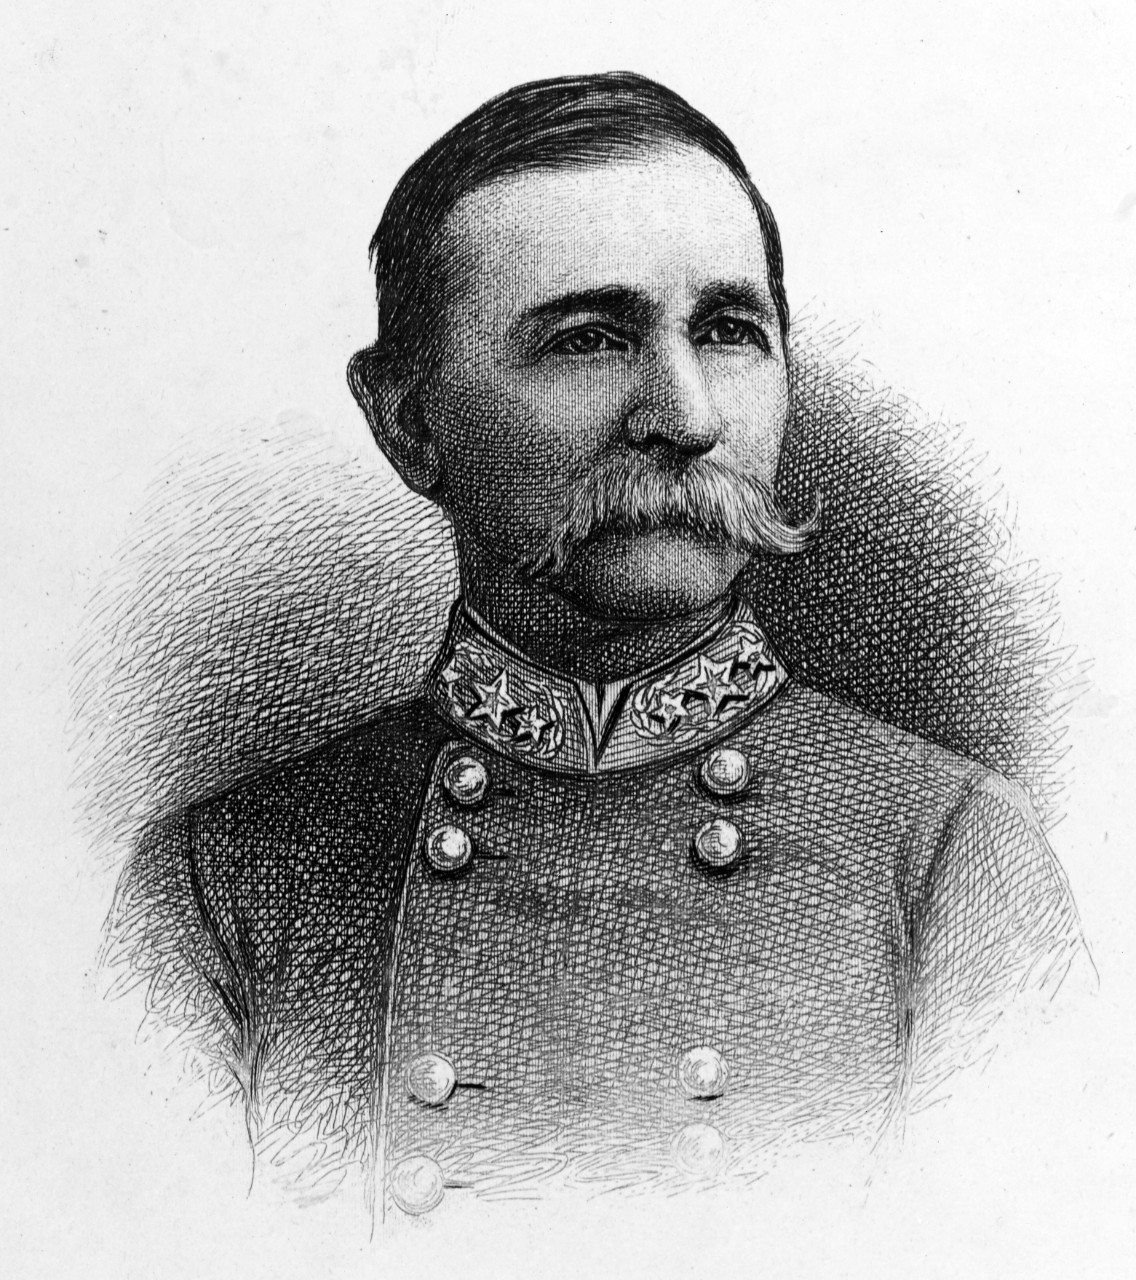 Major Joseph L. Brent, C. S. Army.  